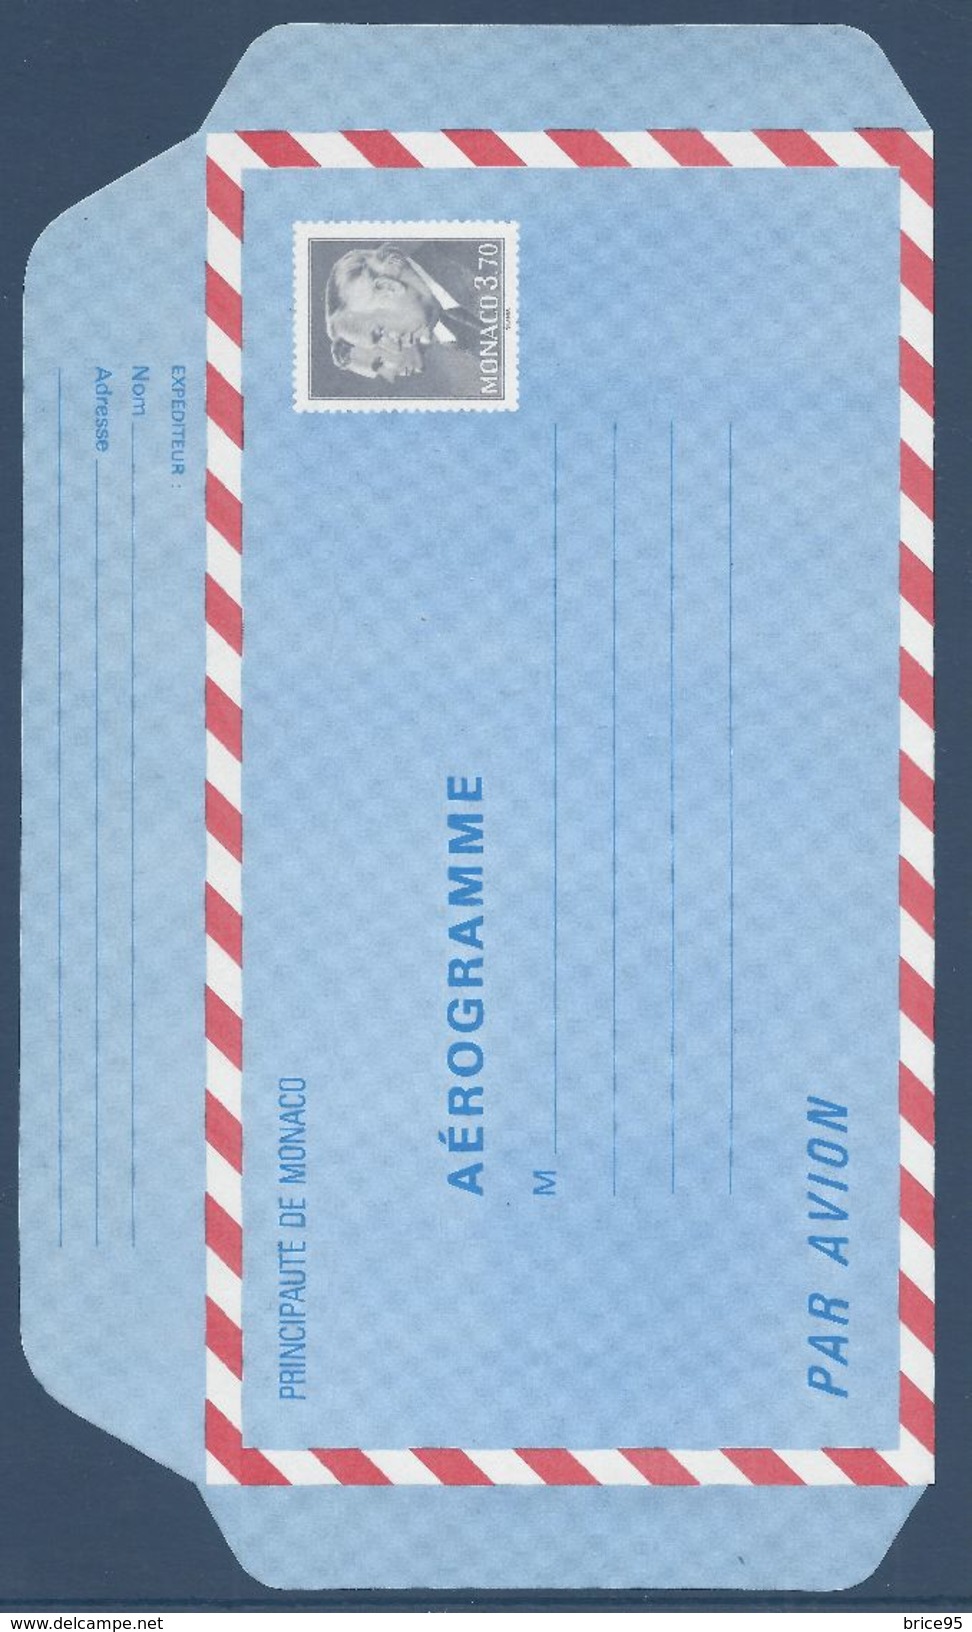 Monaco Aérogrammes - Entiers Postaux - YT N° 507 - Neuf - 1986 - Ganzsachen